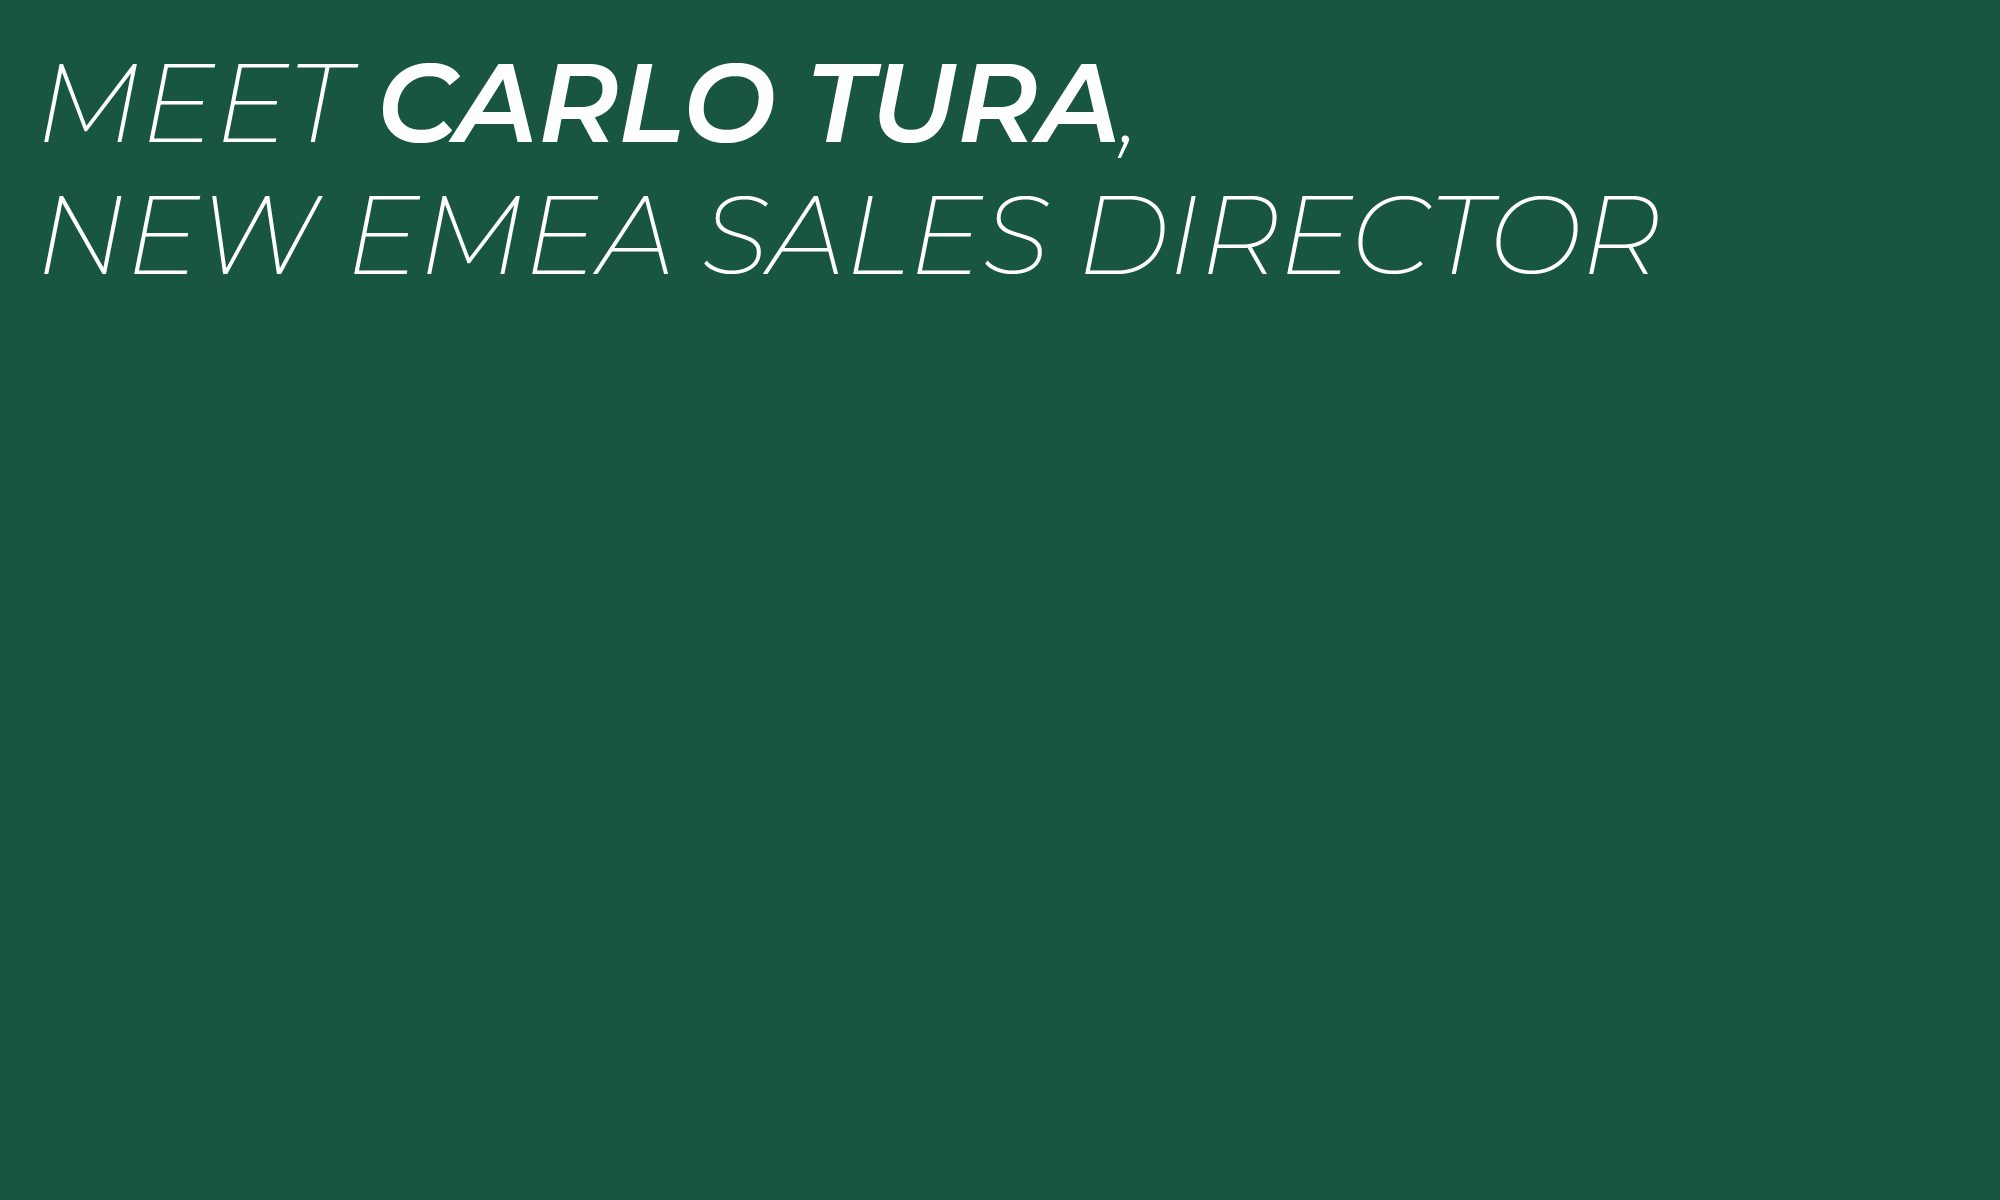 Meet our new EMEA Sales Director!